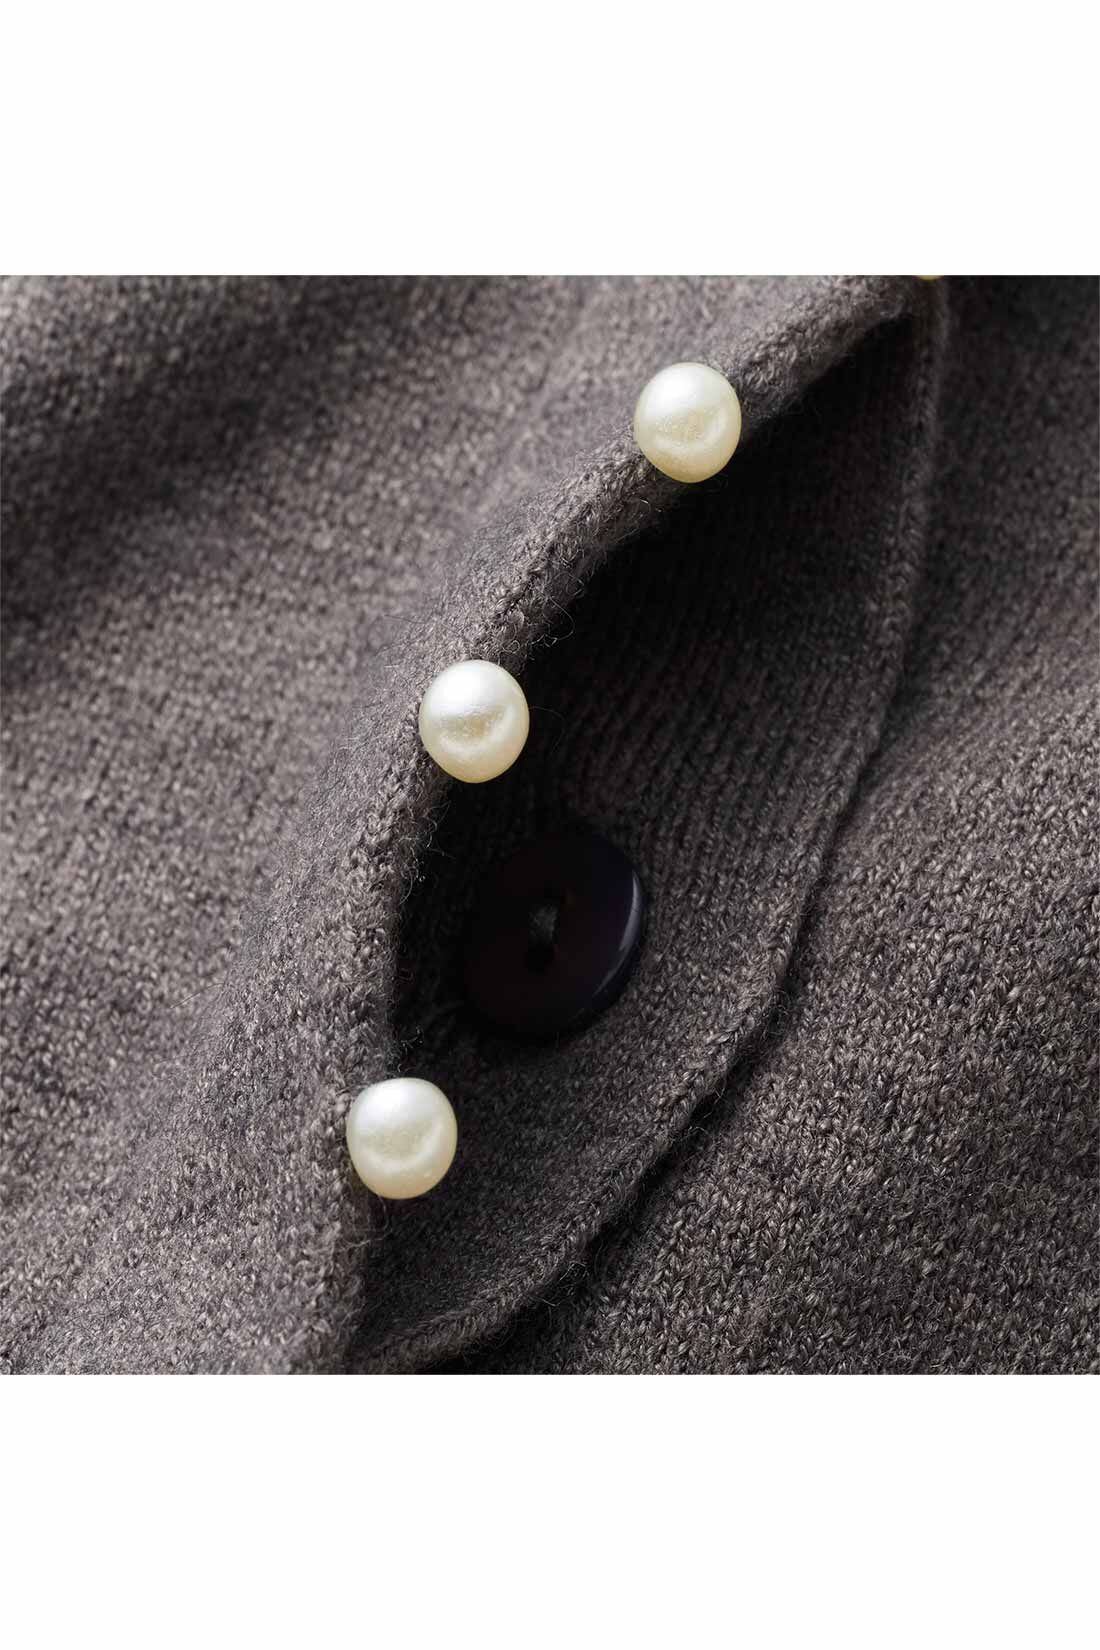 IEDIT|IEDIT[イディット]　アクセサリーみたいなミニパールが上品な 柄編み袖のカーディガン〈グレー〉|フロントボタンを隠した比翼仕立て。パールの飾りが引き立つデザインに。